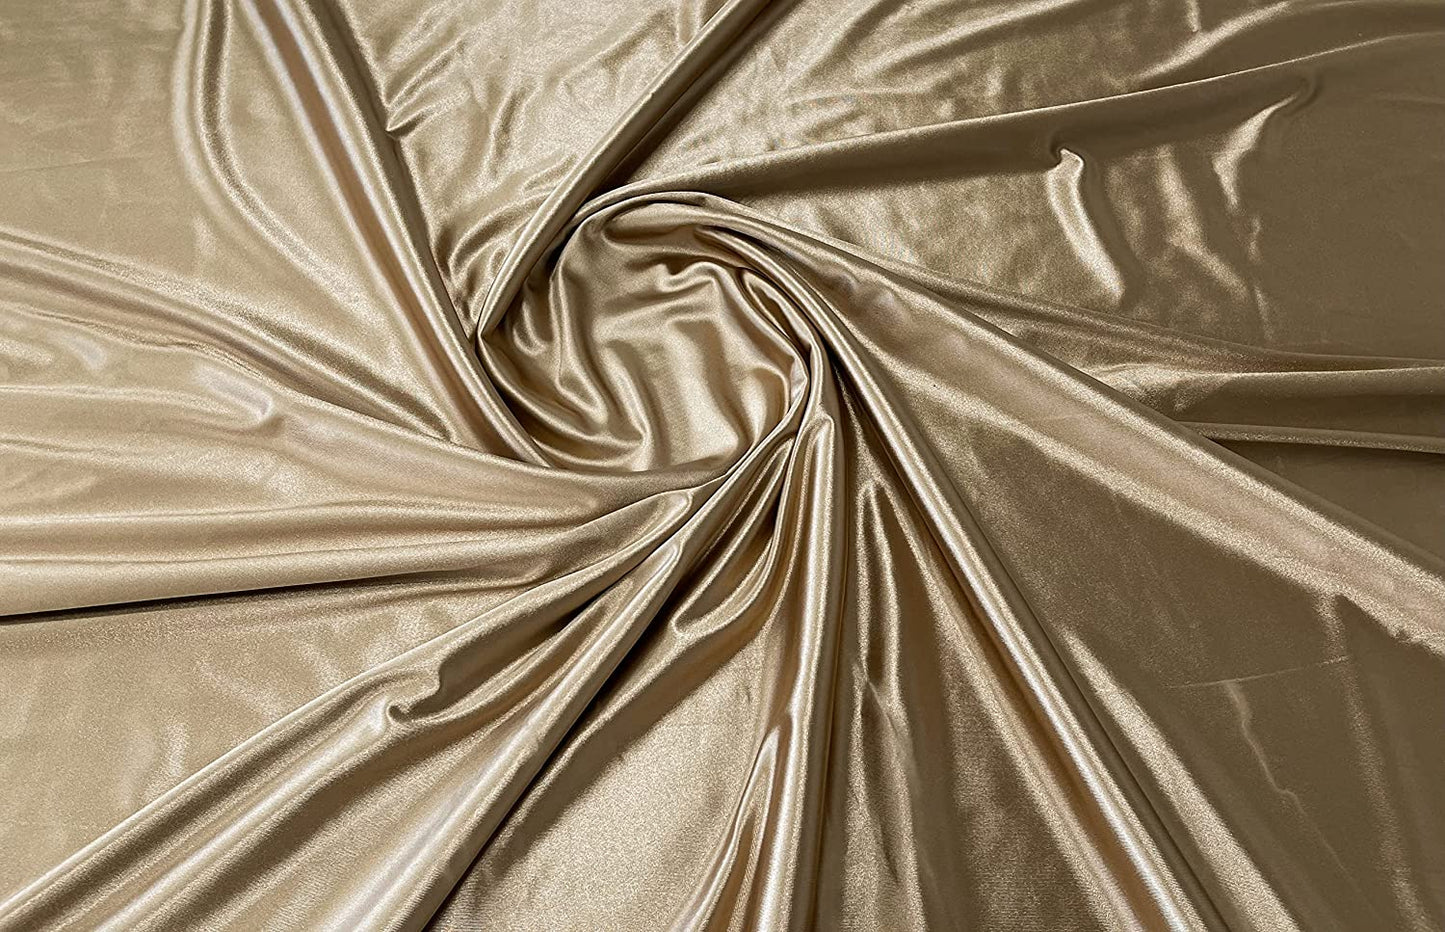 Deluxe Shiny Polyester Spandex Stretch Fabric (1 Yard, Khaki)